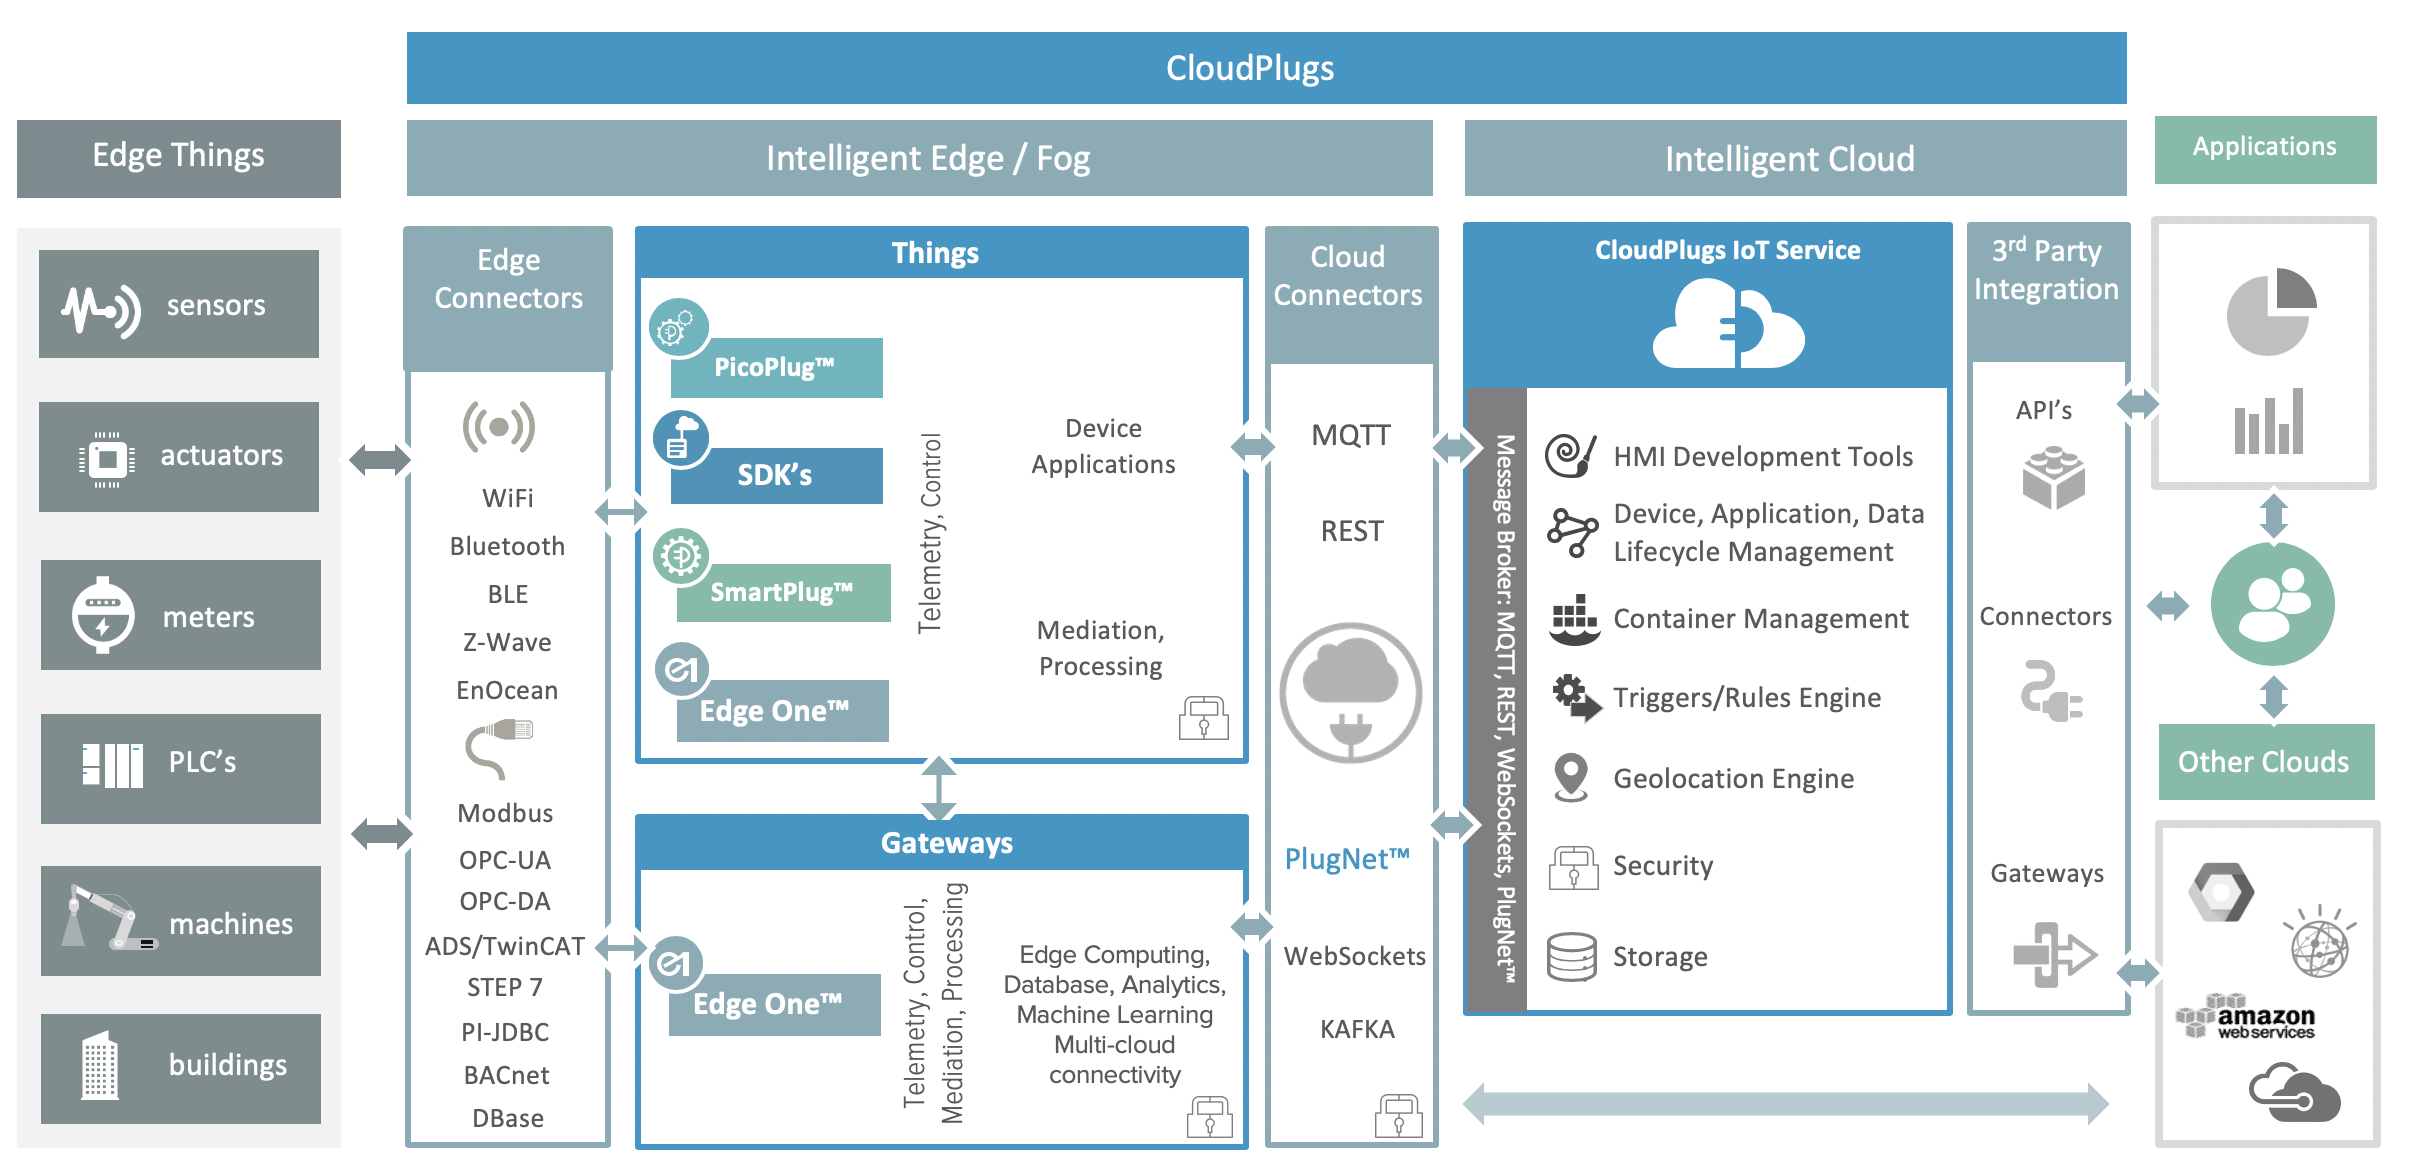 CloudPlugs Architecture